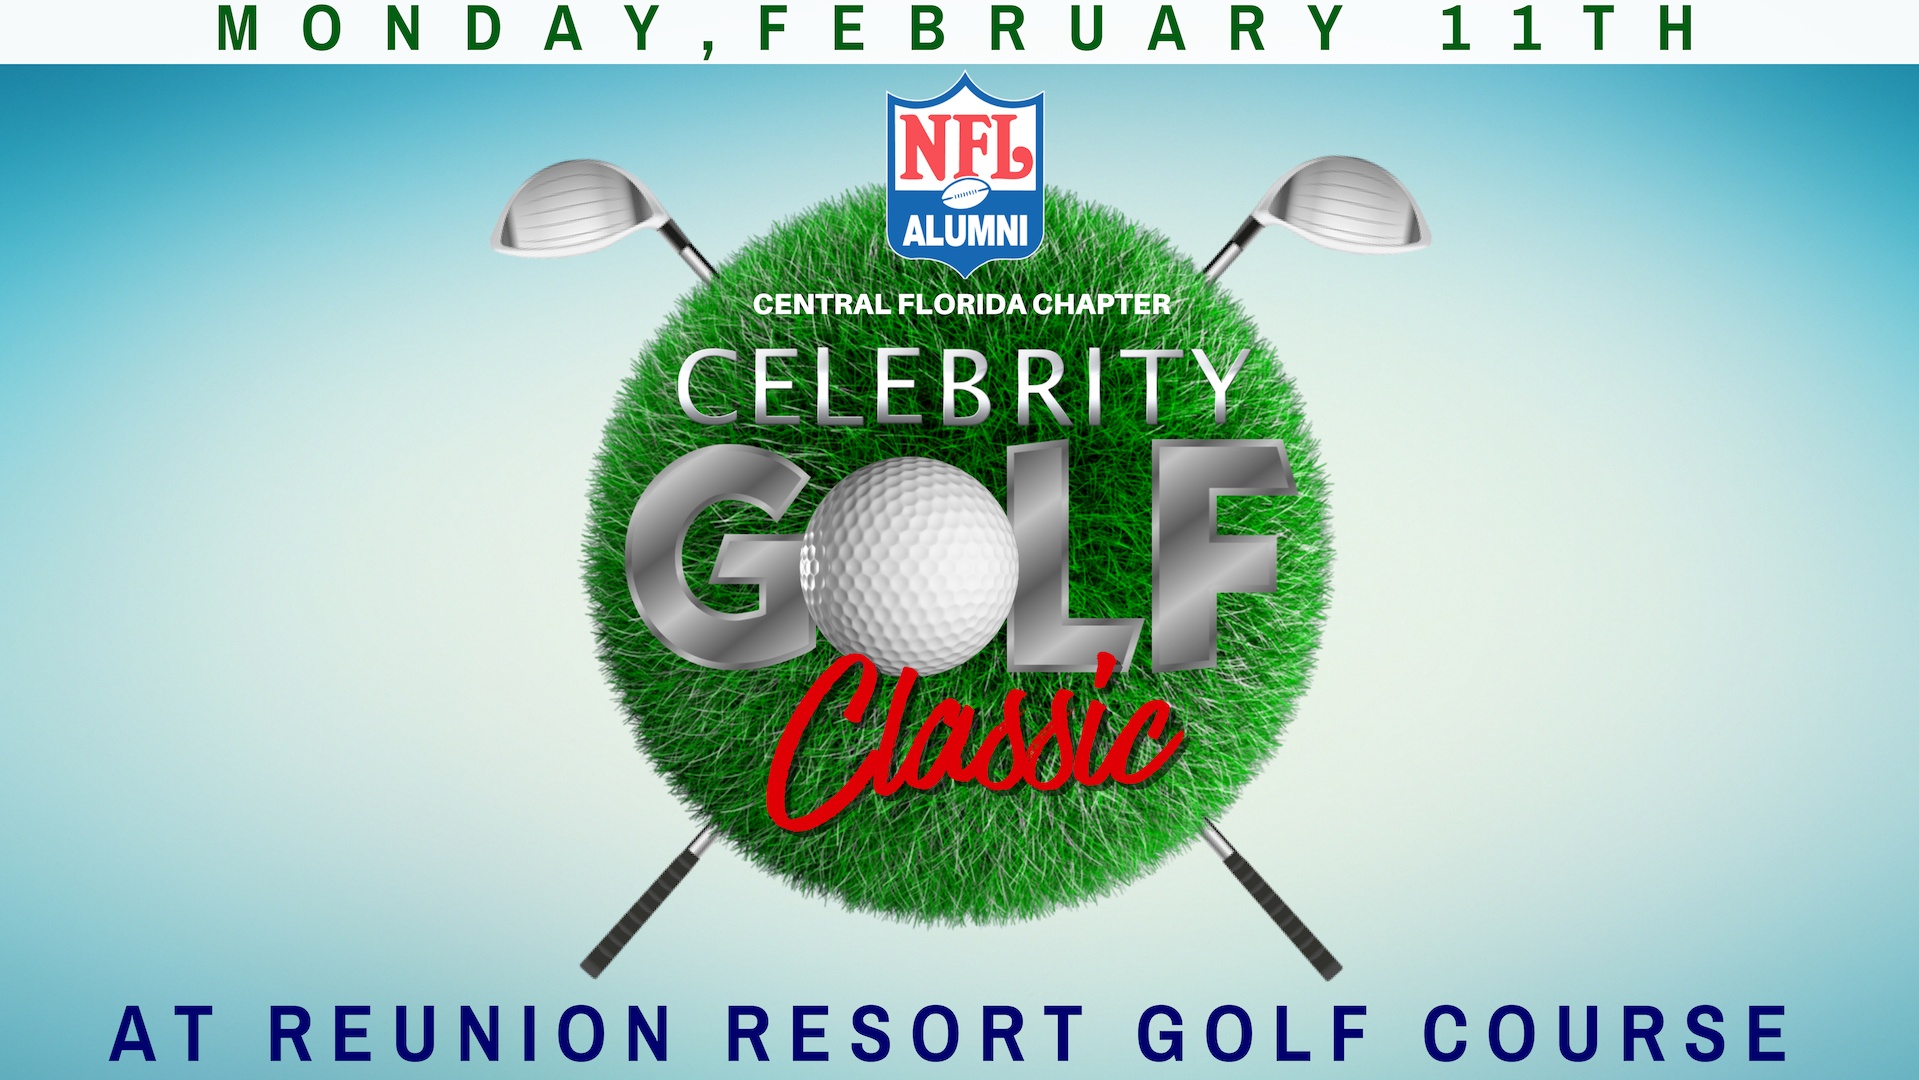 NFL Alumni CFL Celebrity Golf Classic SponsorMyEvent